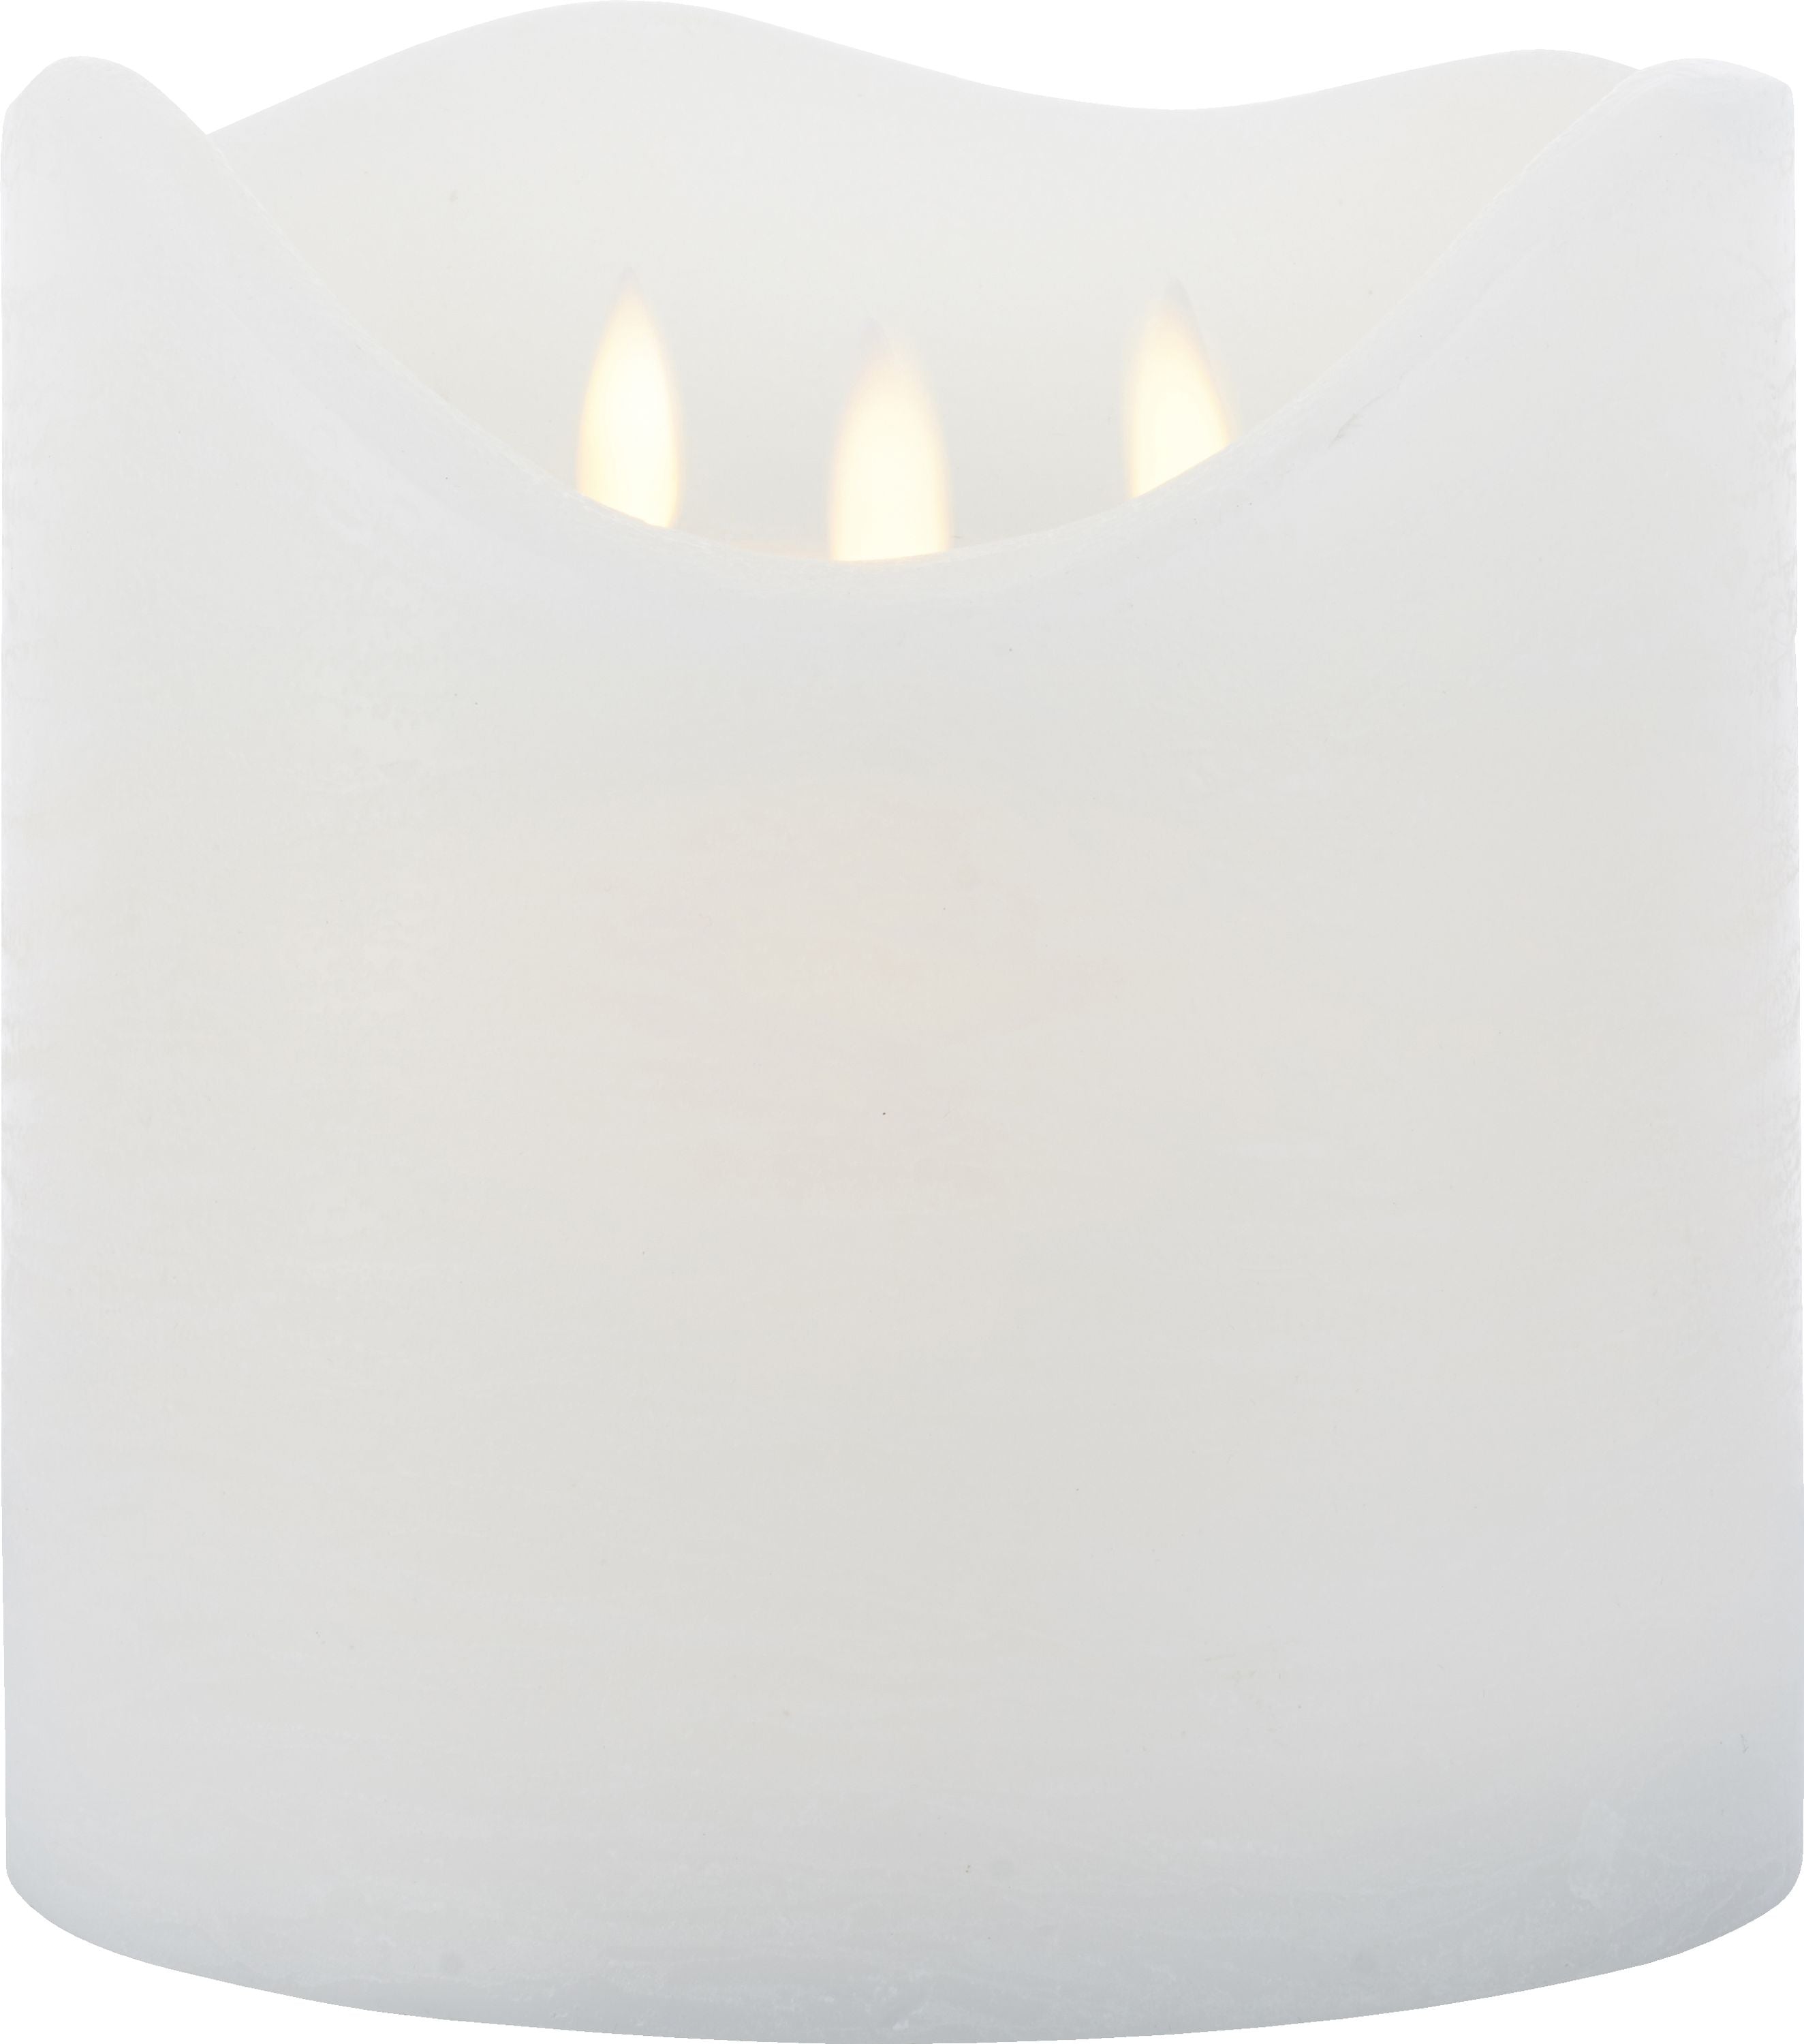 Sirius Sara Lumière LED exclusive Øx H 15x15 cm, blanc